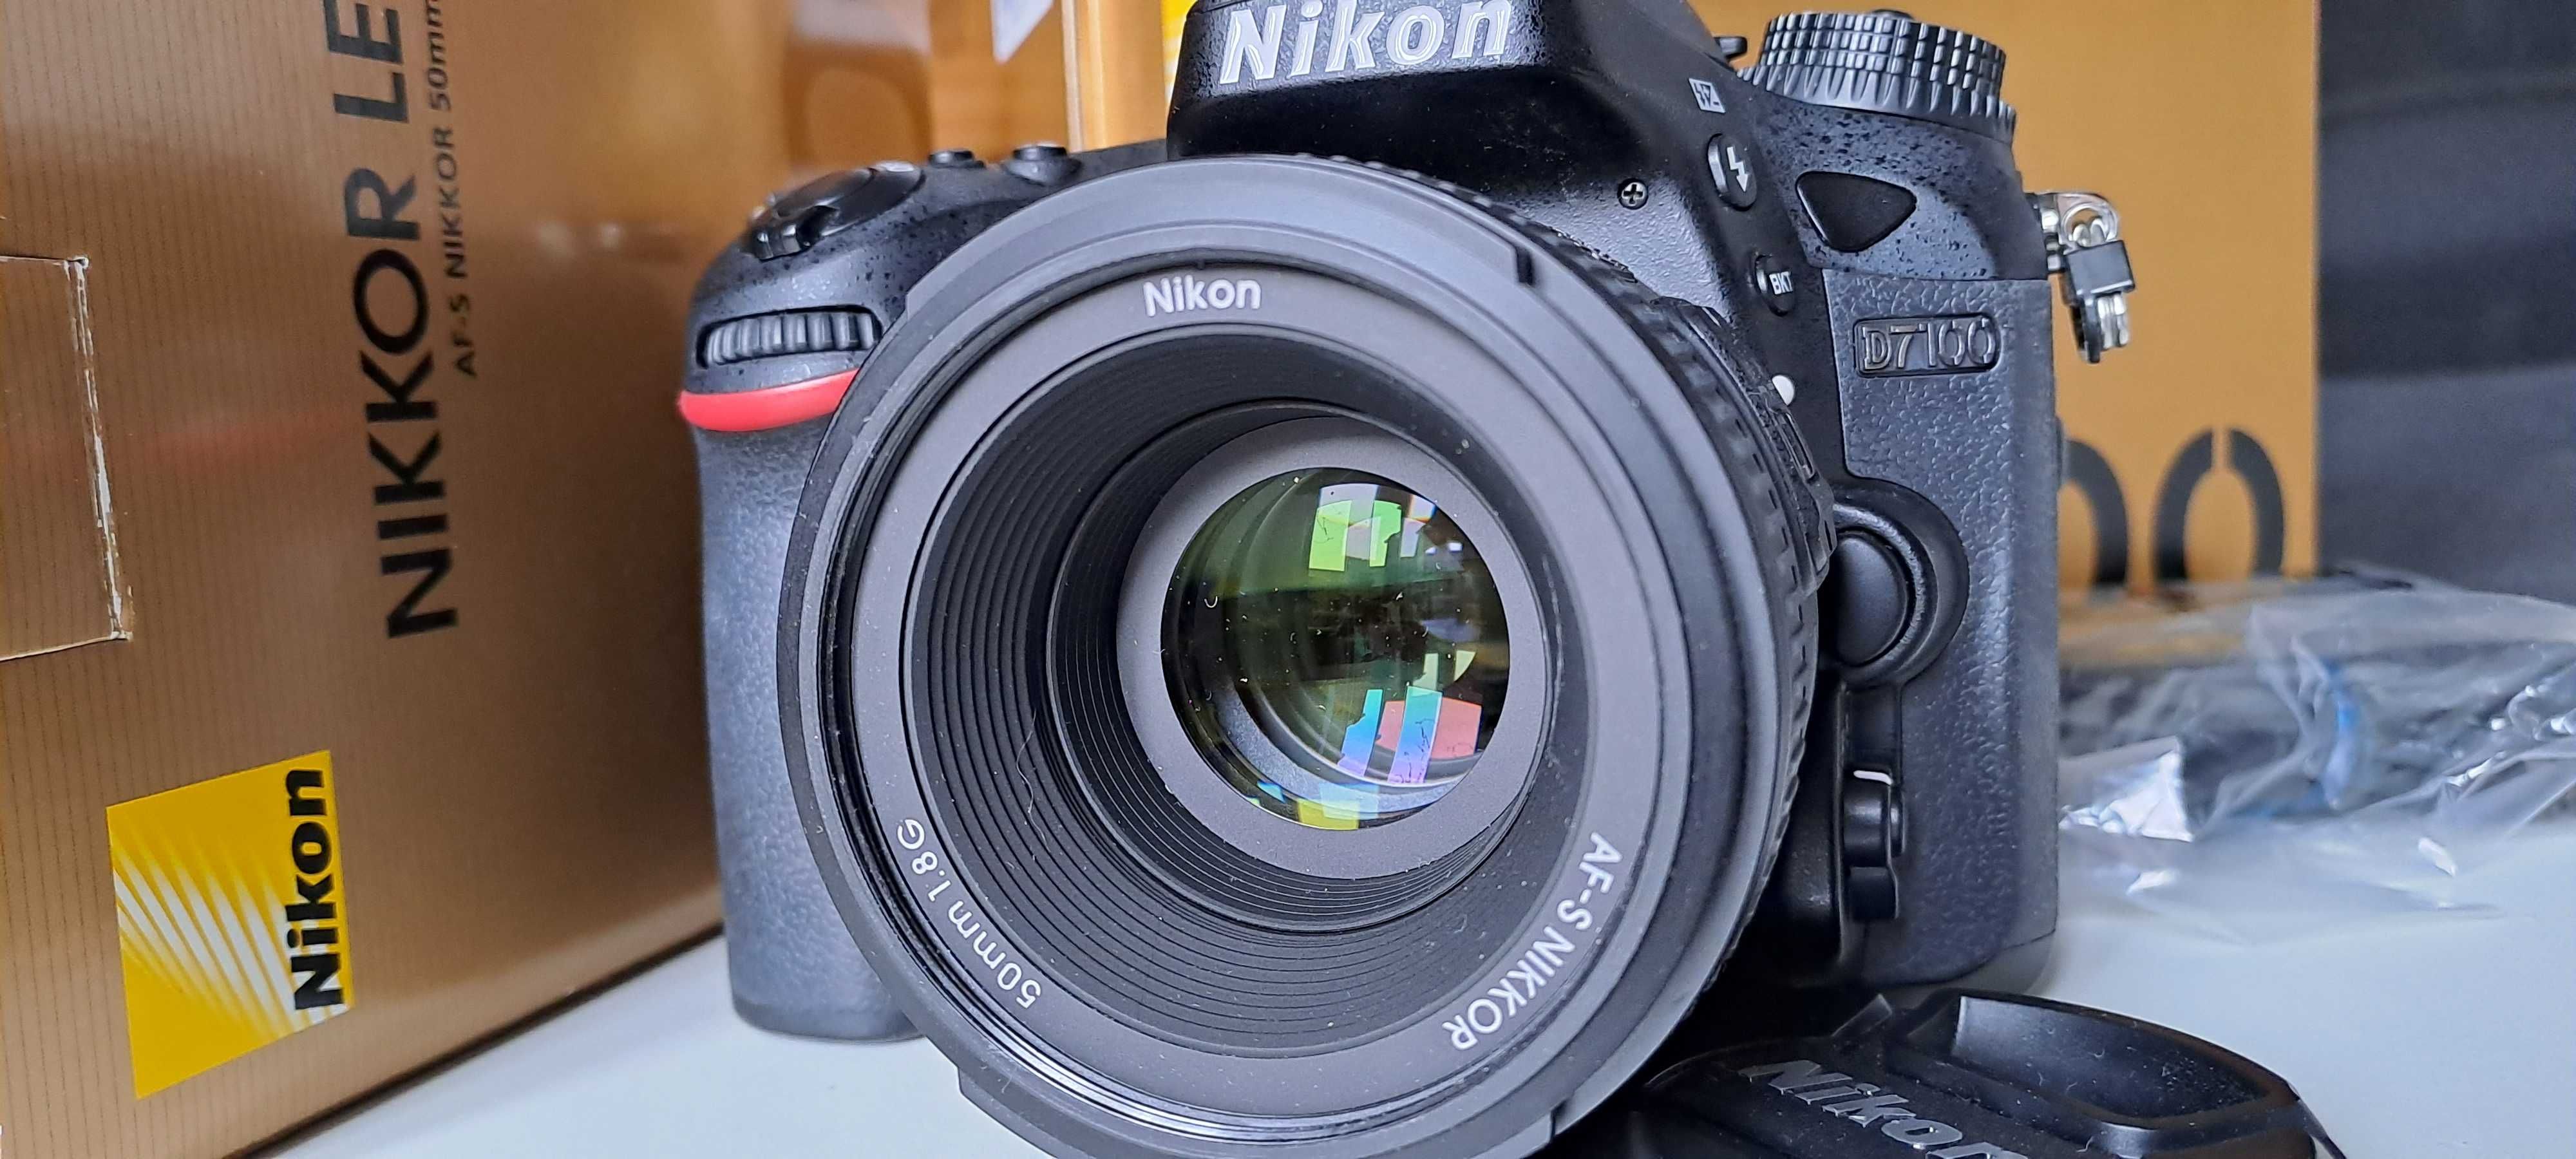 Vand Dslr Nikon 7100 si obiectiv 50 mm 1.8